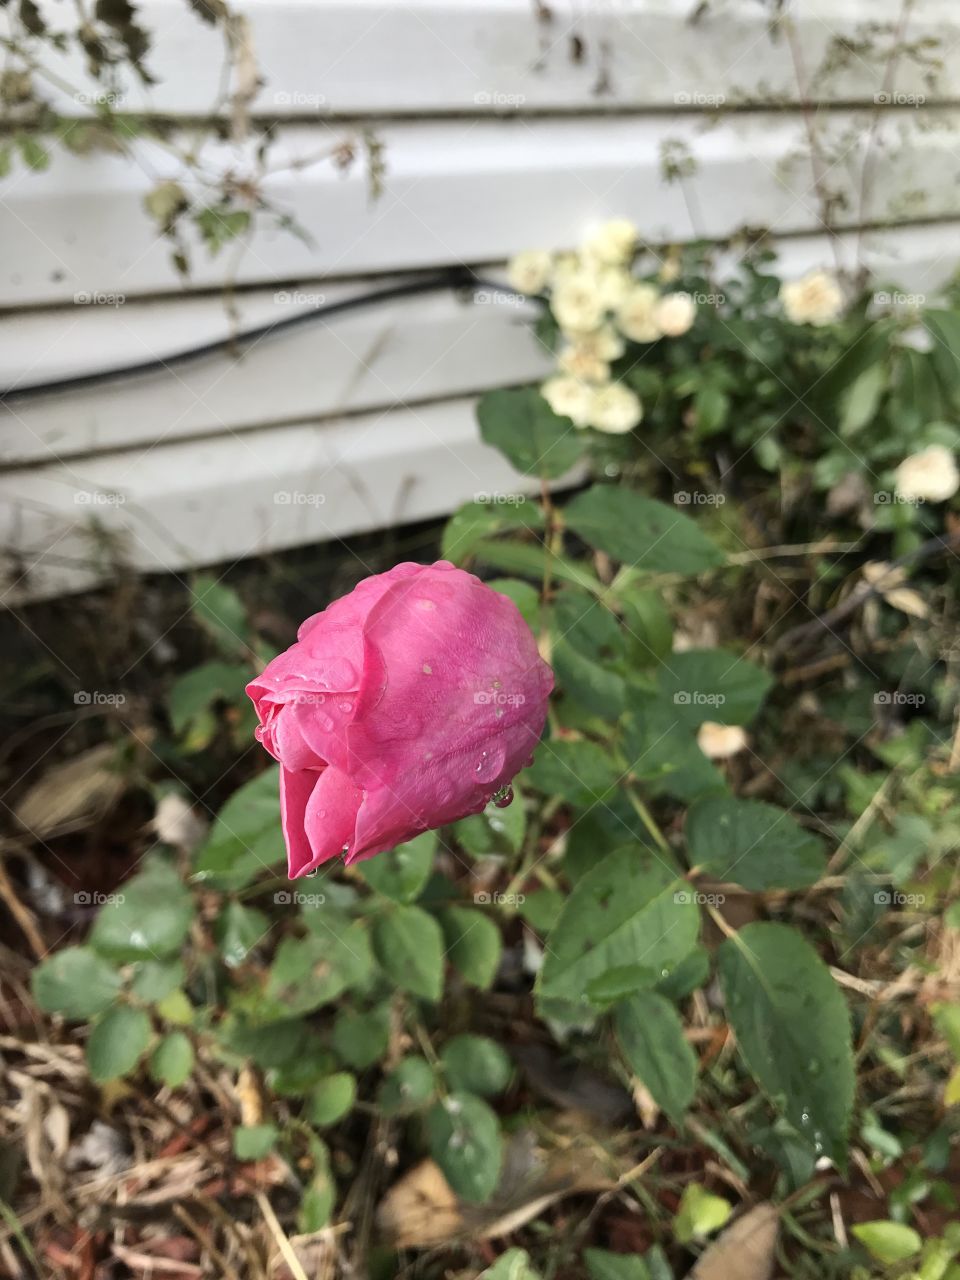 One last rose